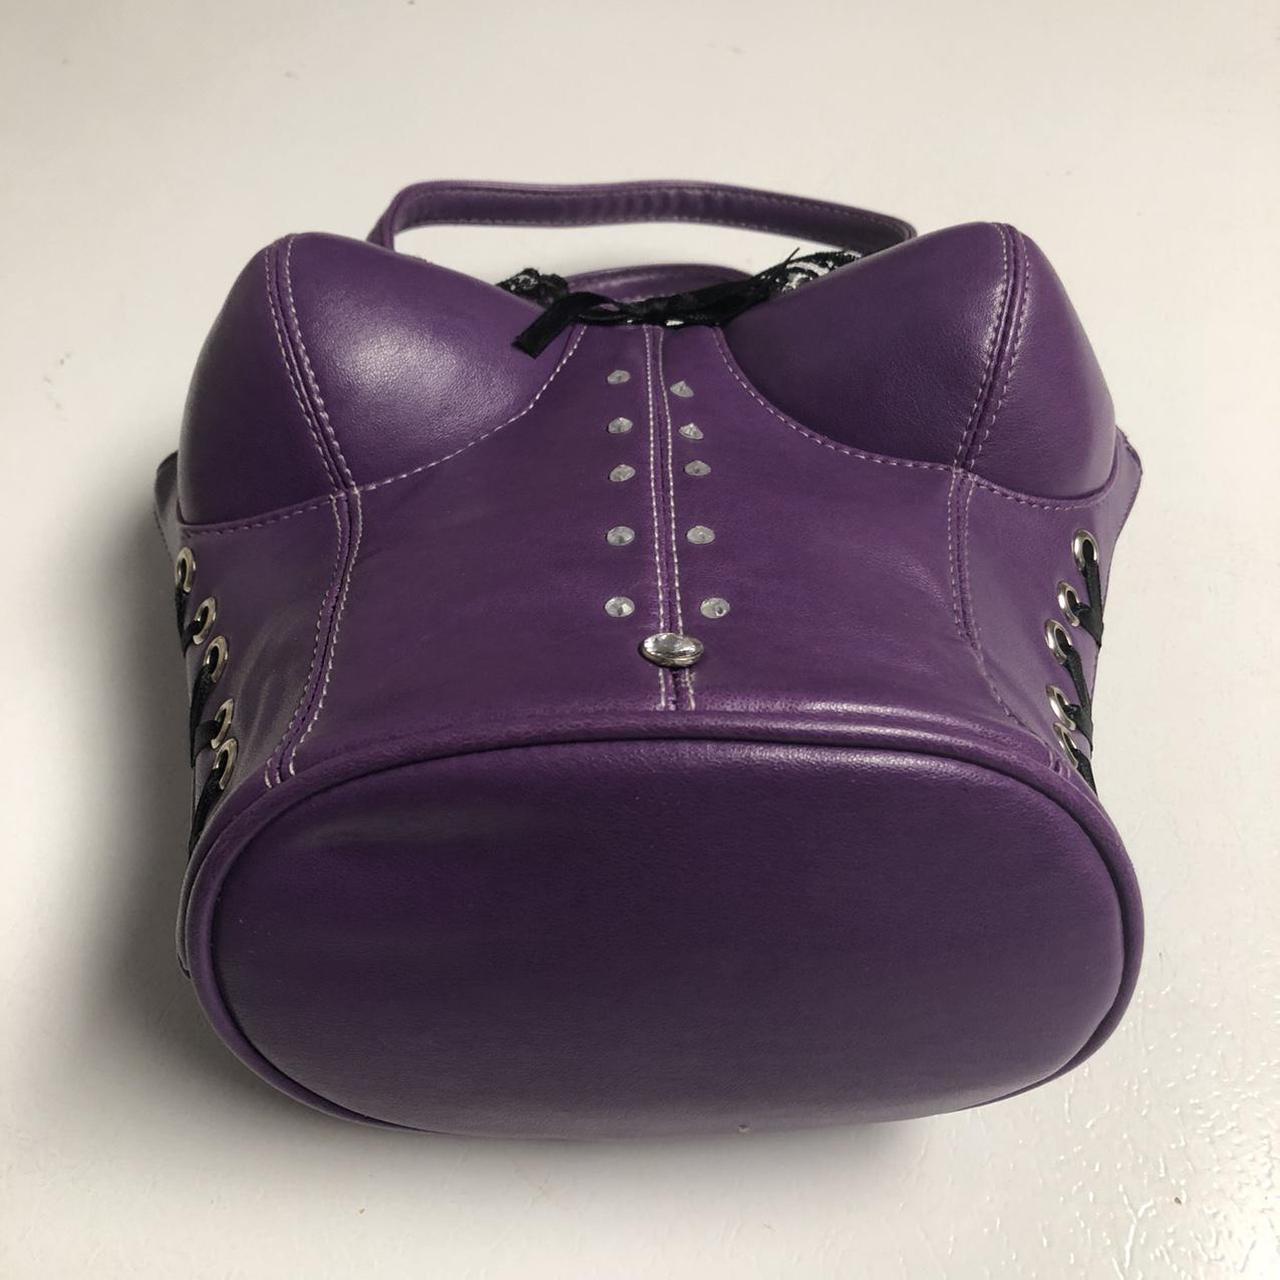 Hot Topic Women's Black and Purple Bag (3)